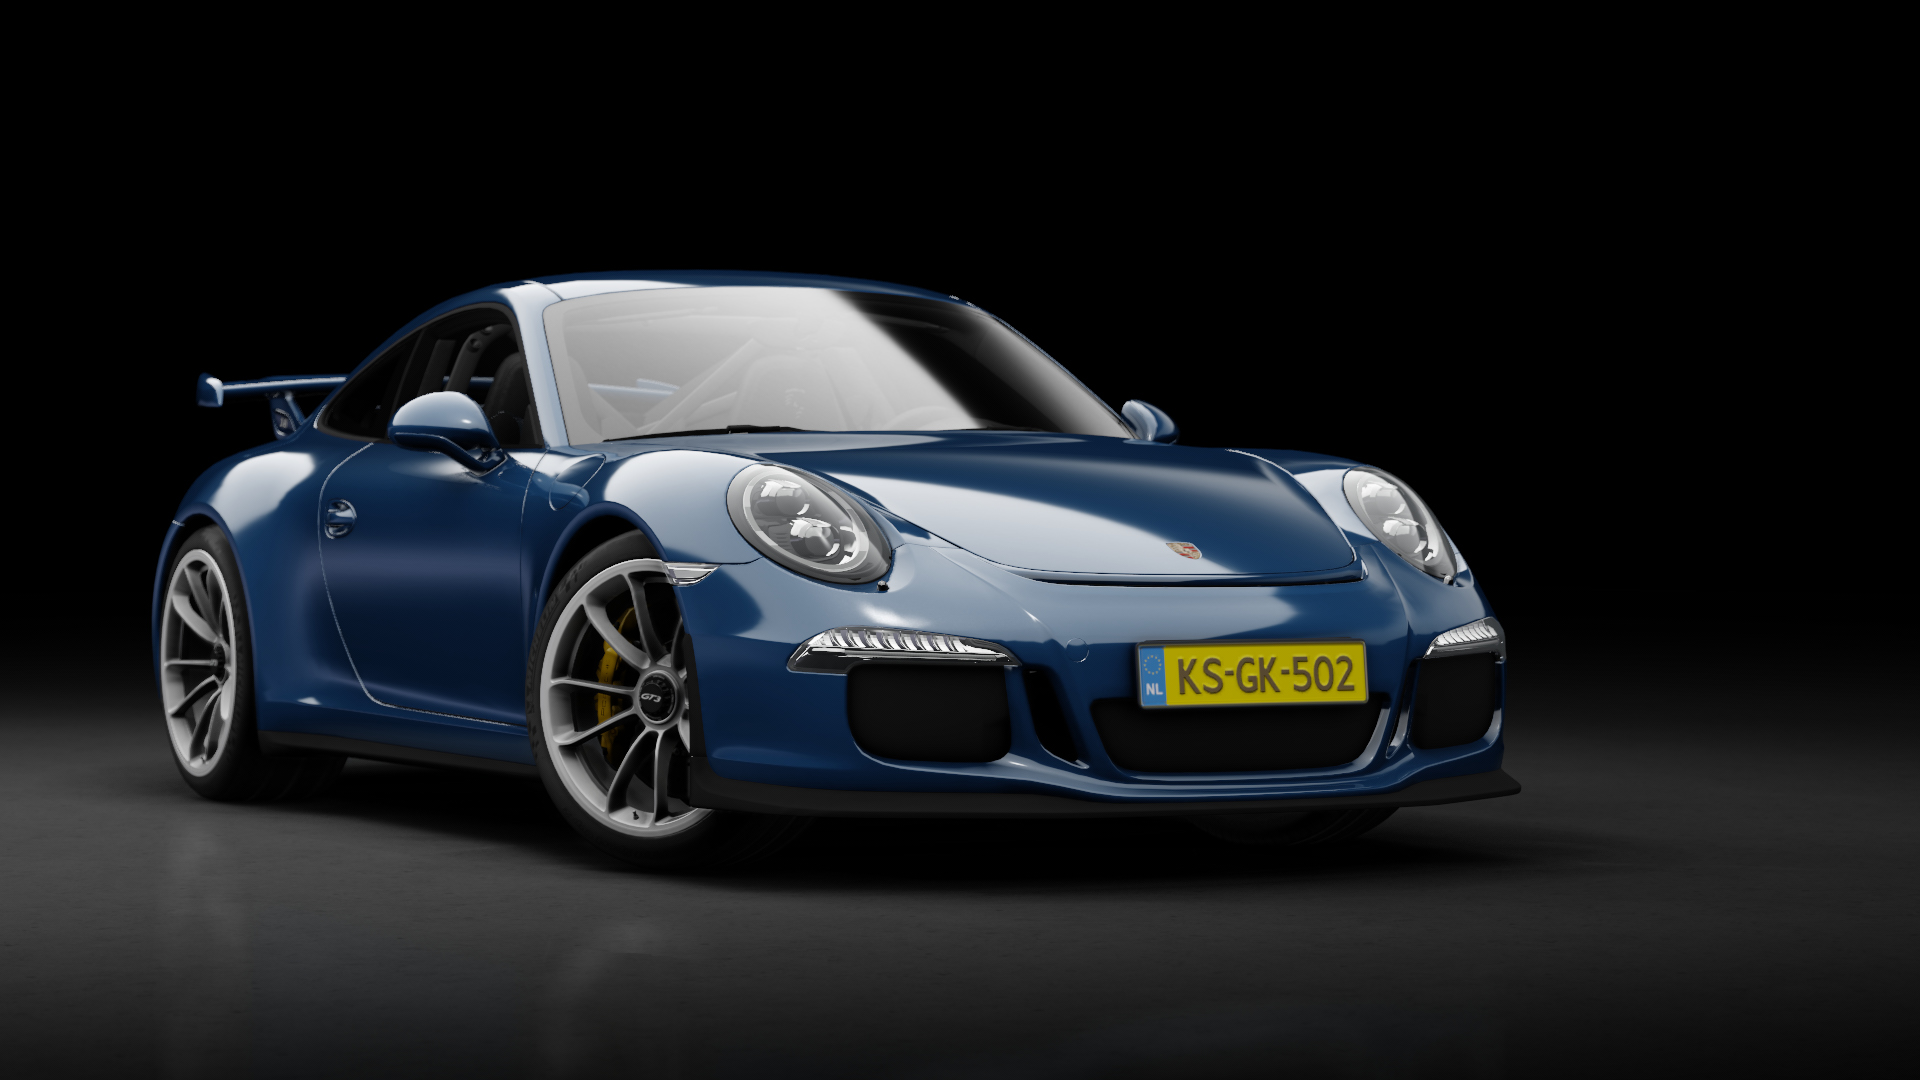 Porsche 911 GT3 (991) 2013, skin s01_ocean_silver_metalic